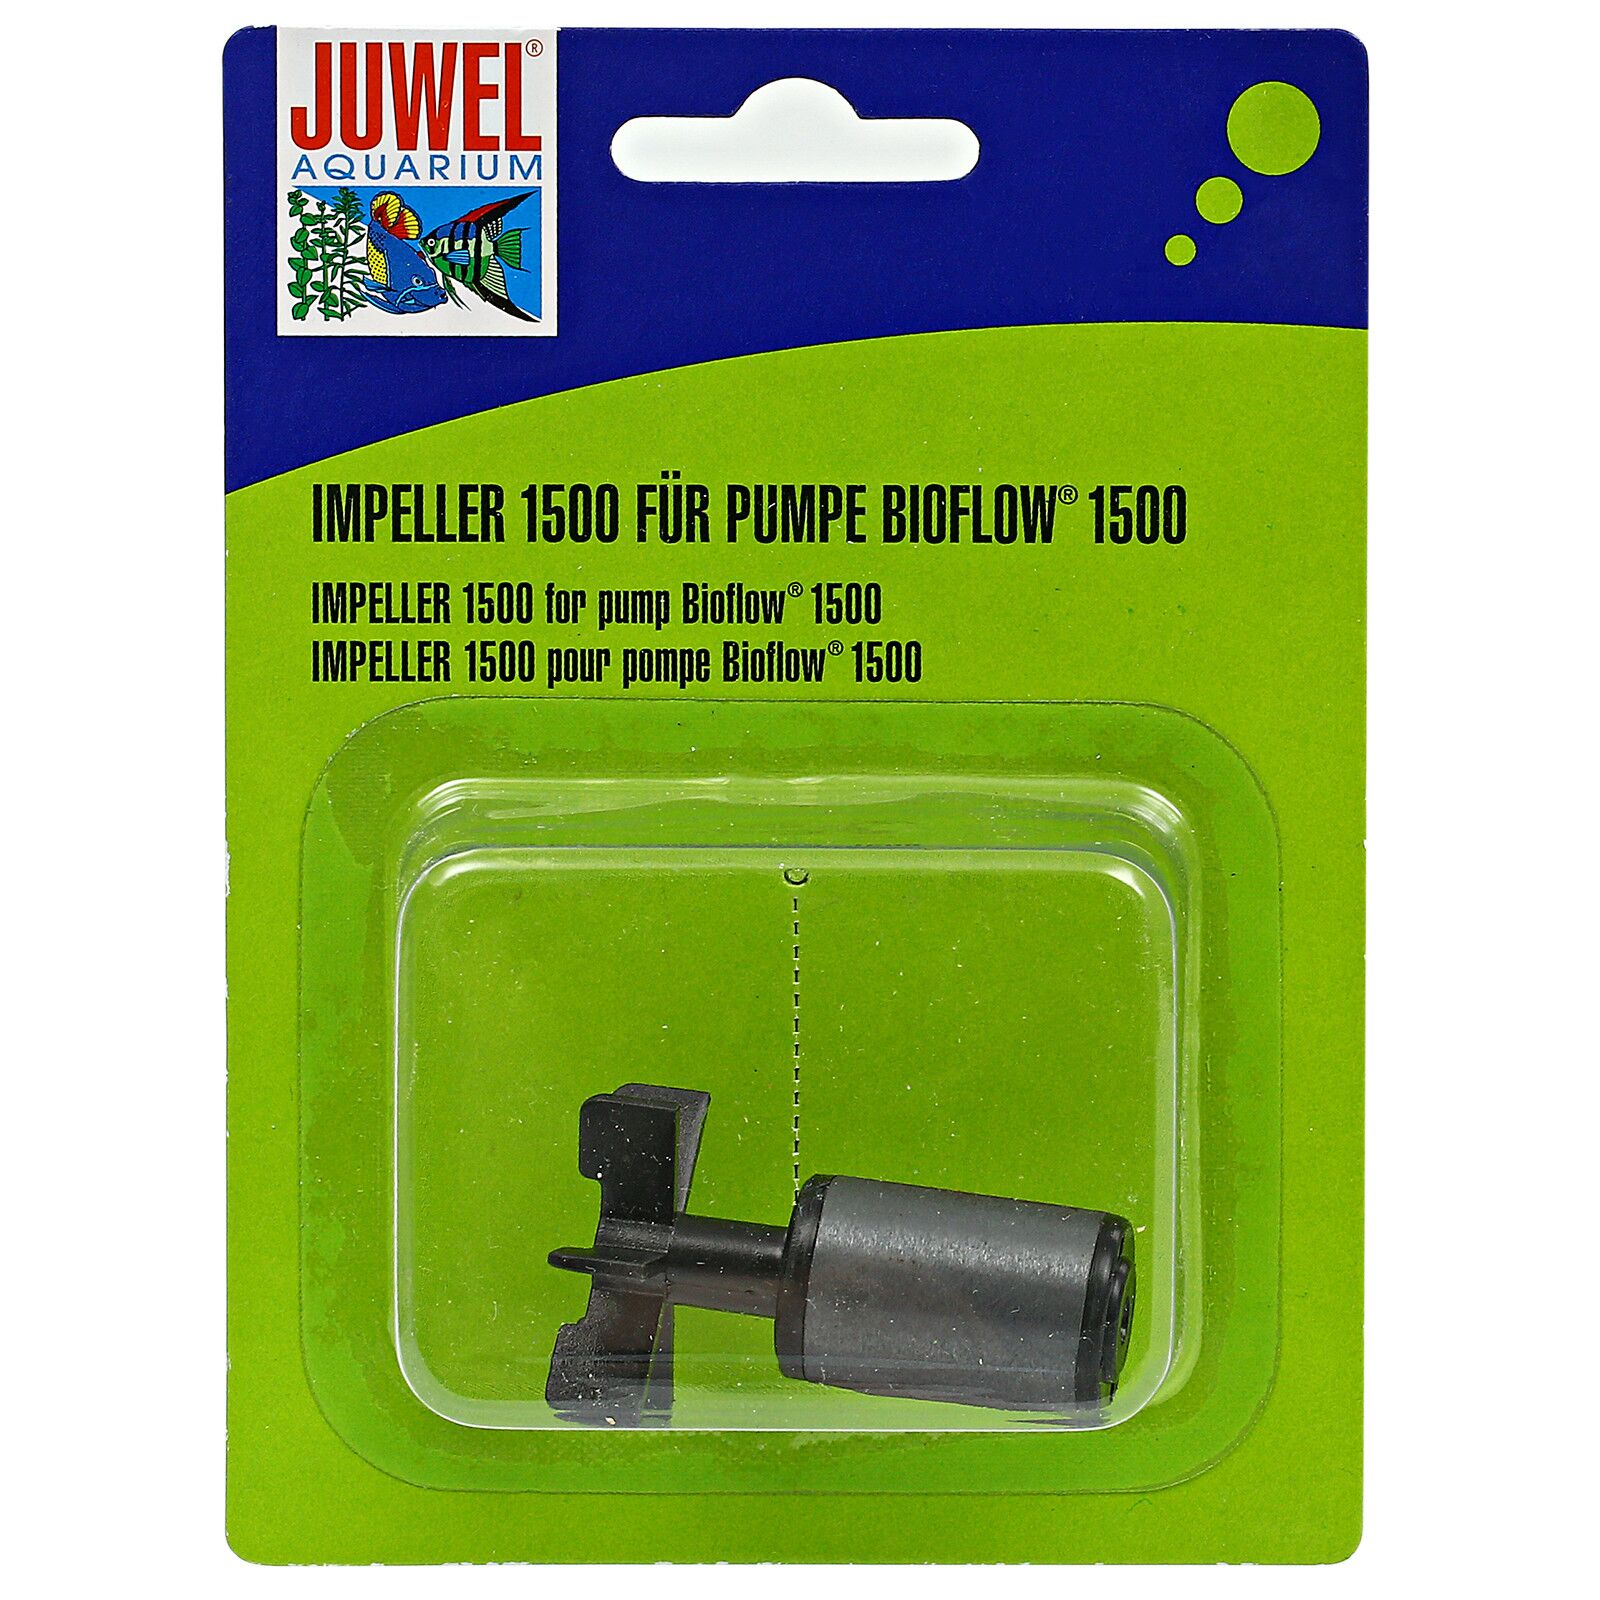 Juwel -叶轮- Bioflow &泵